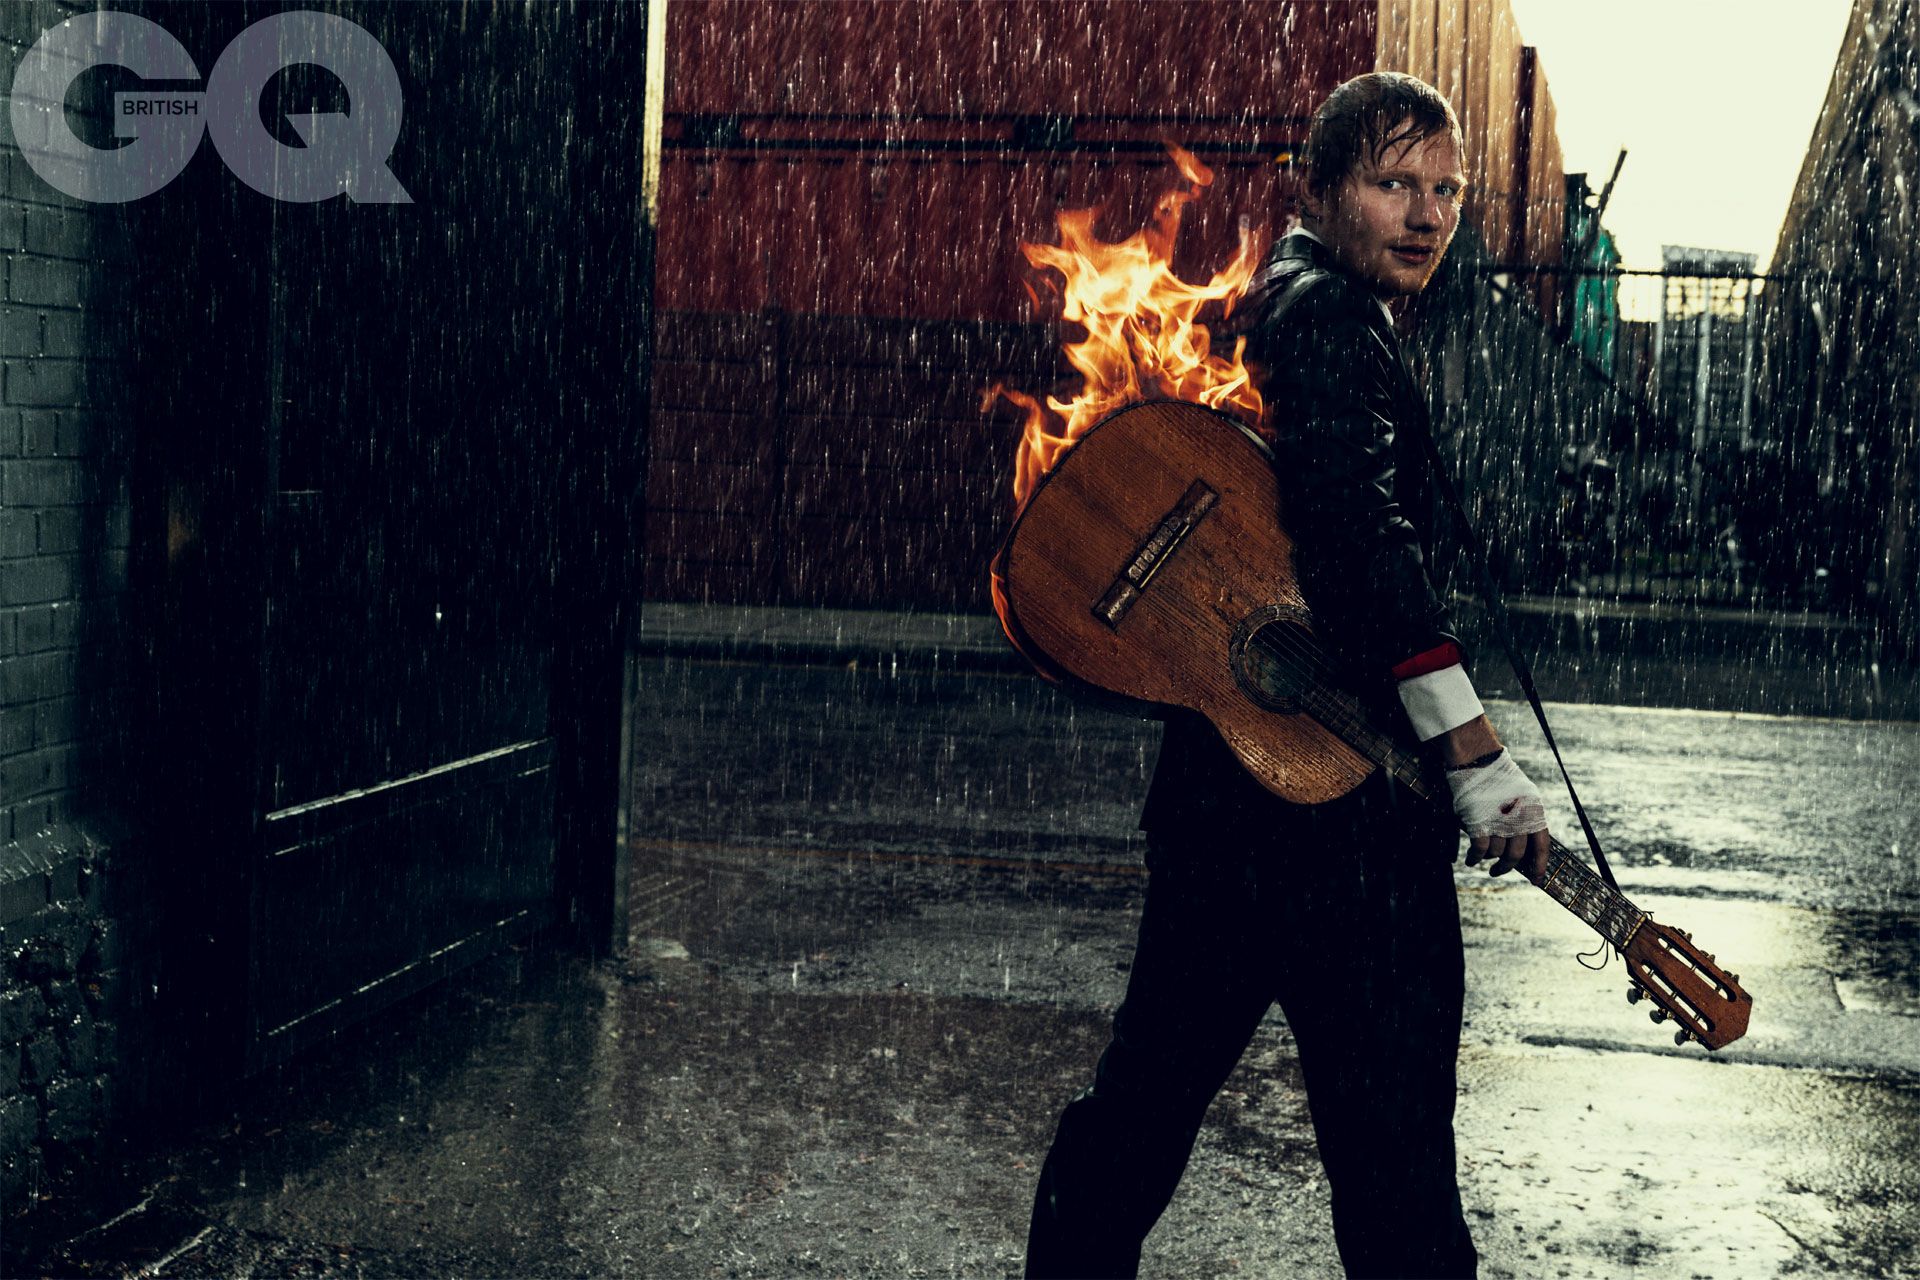 Ed Sheeran's guitar is on fire!